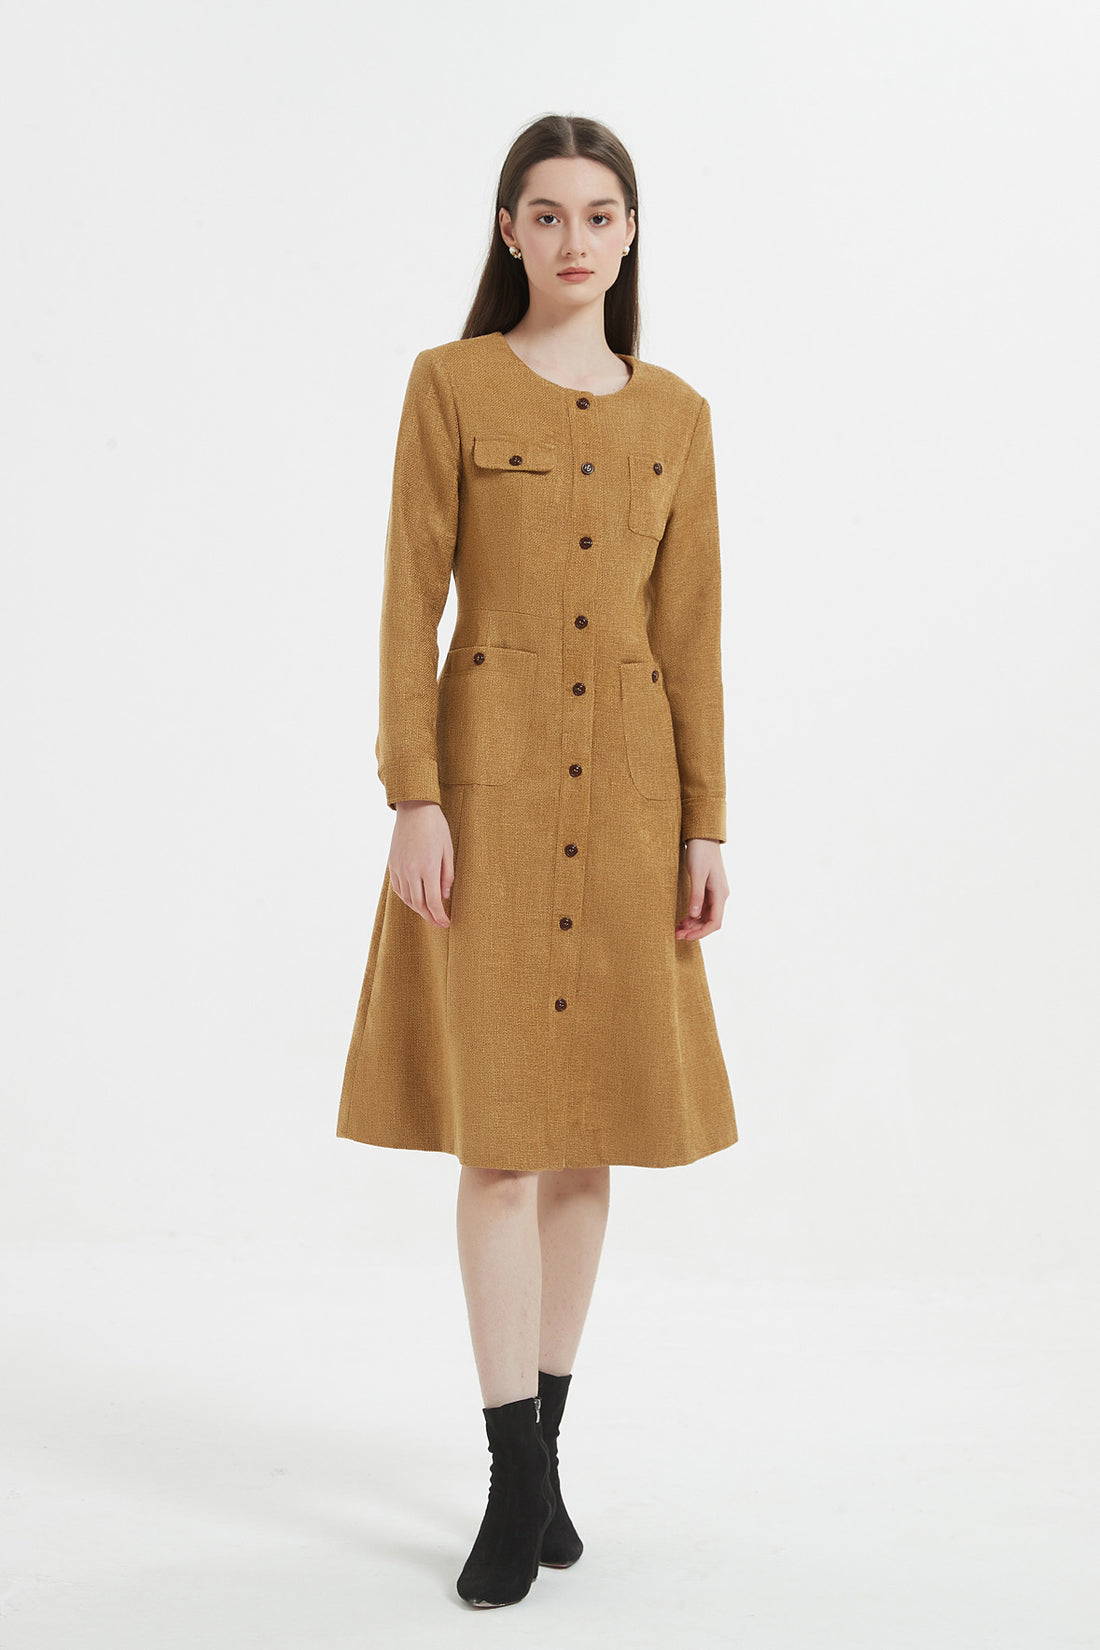 SKYE Shop Chic Modern Elegant Timeless Women Clothing French Parisian Minimalist Emilia Tweed Dress brown 5